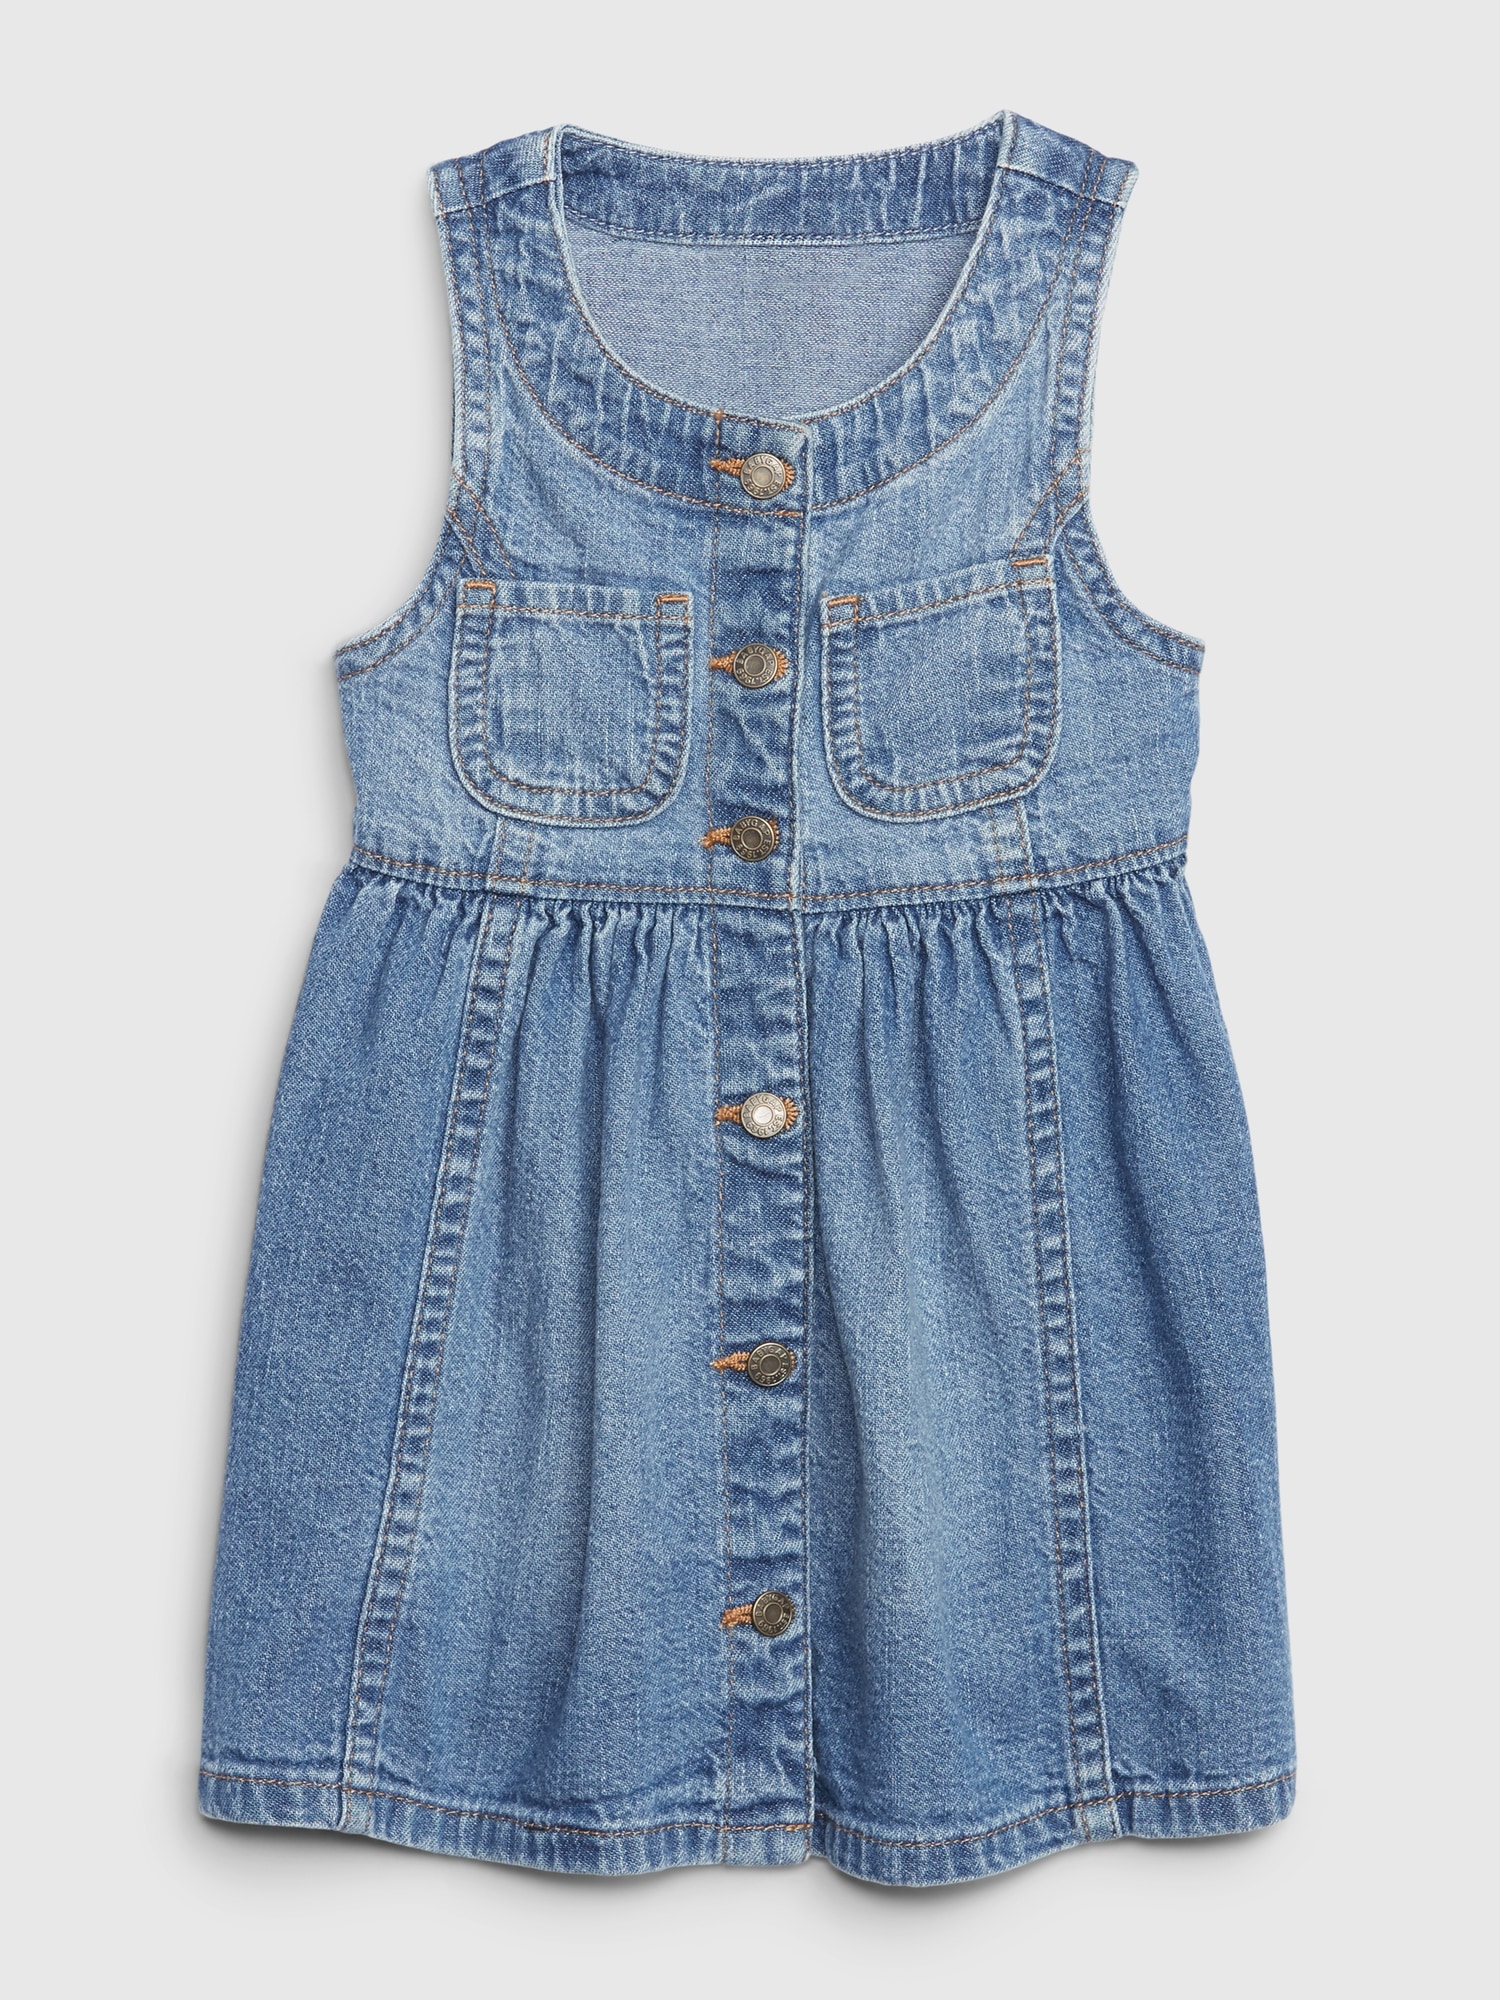 Baby Vintage Denim Dress | Gap